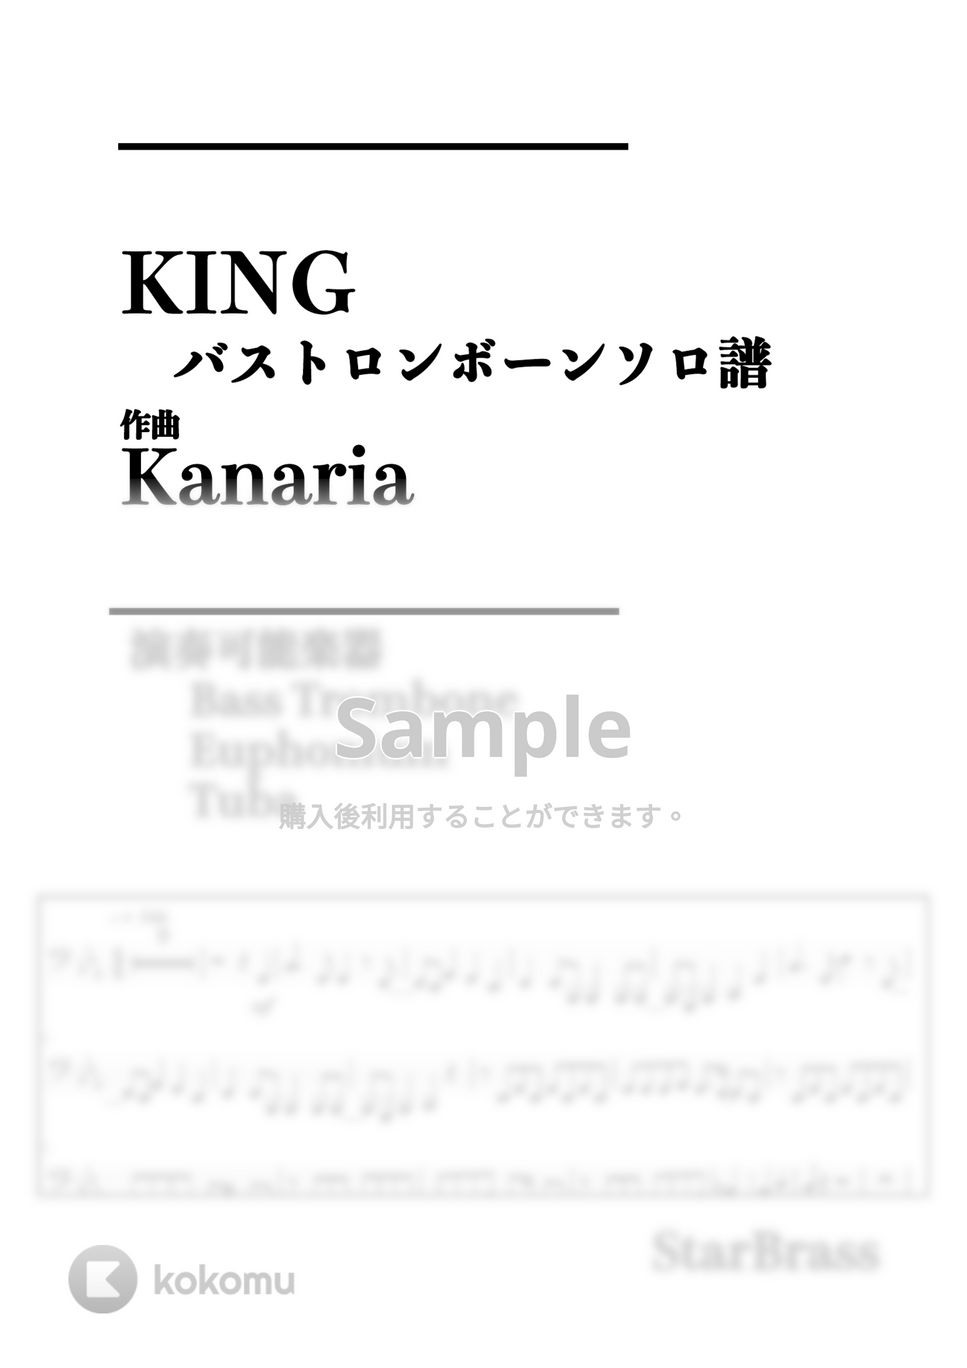 Kanaria - KING (-Bass Trombone Solo- 原キー) by Creampuff